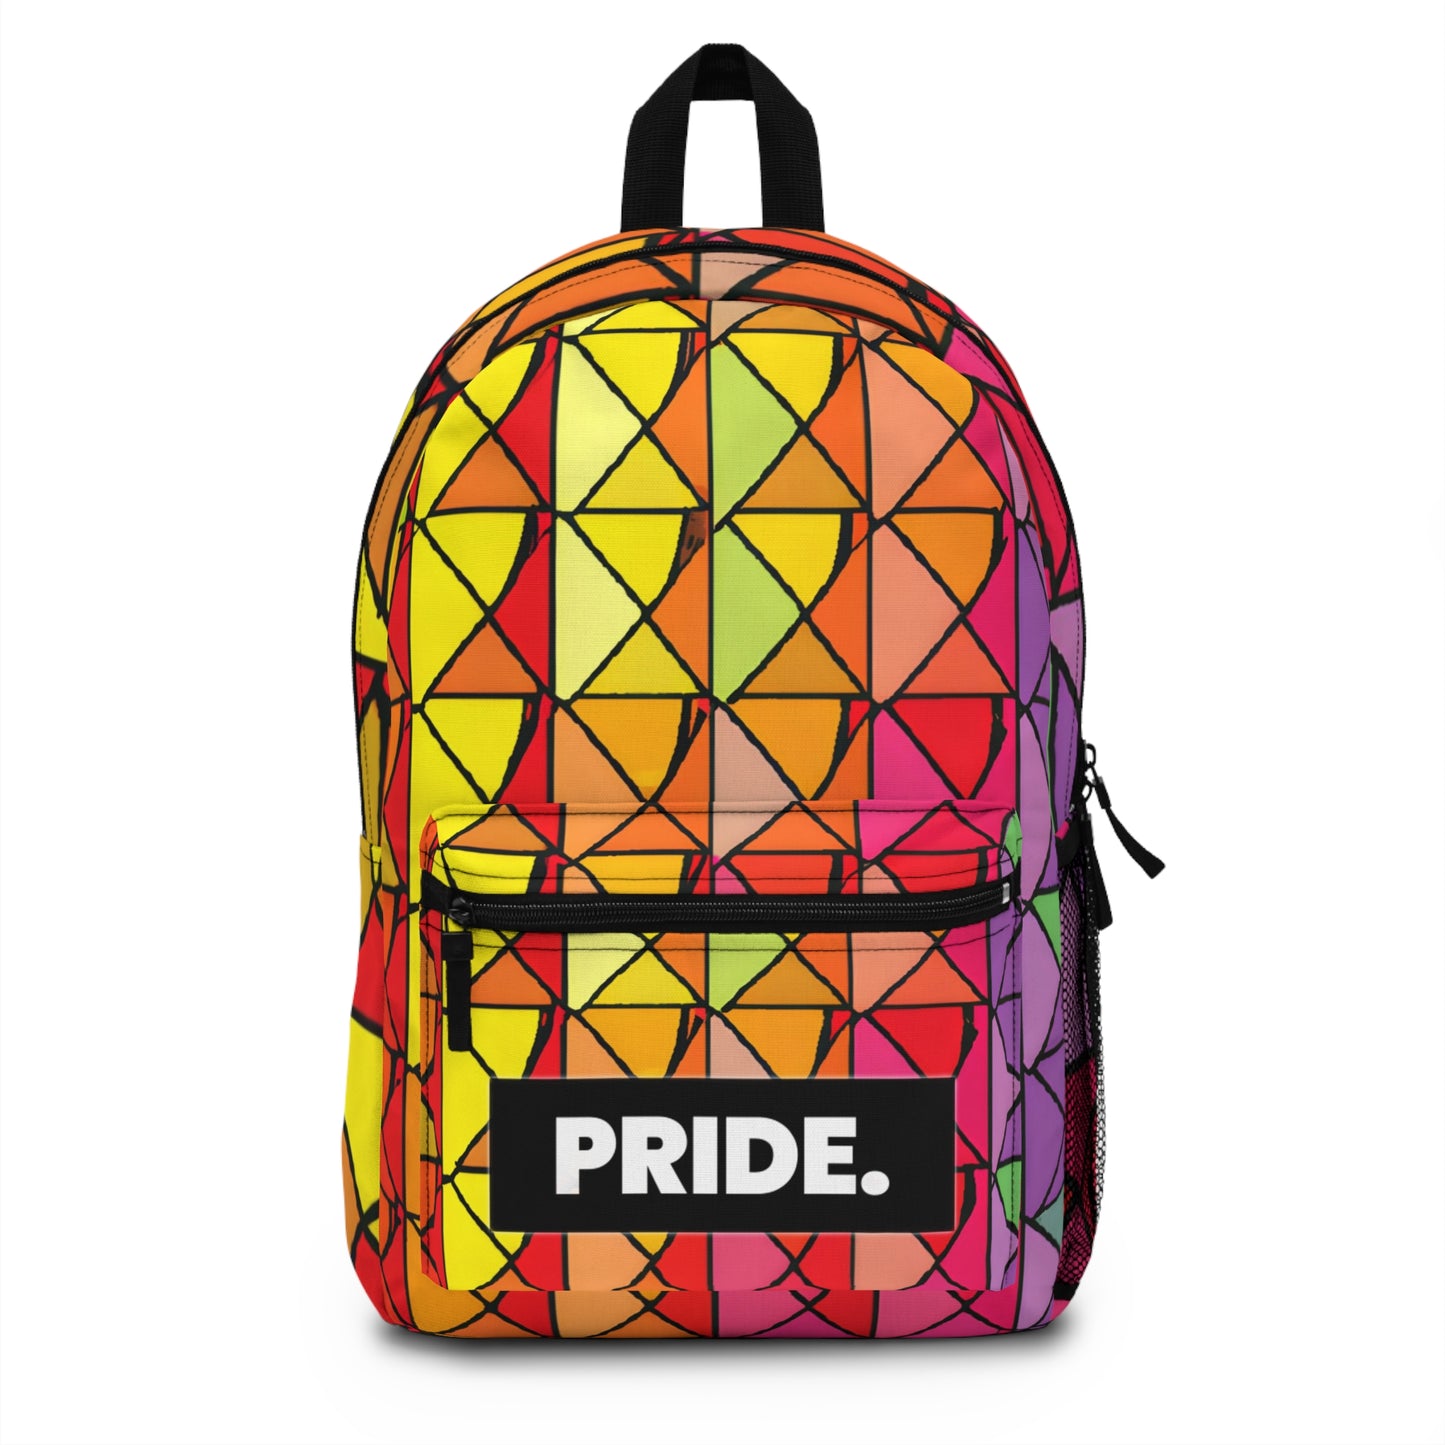 AmberFantasia - Gay Pride Backpack